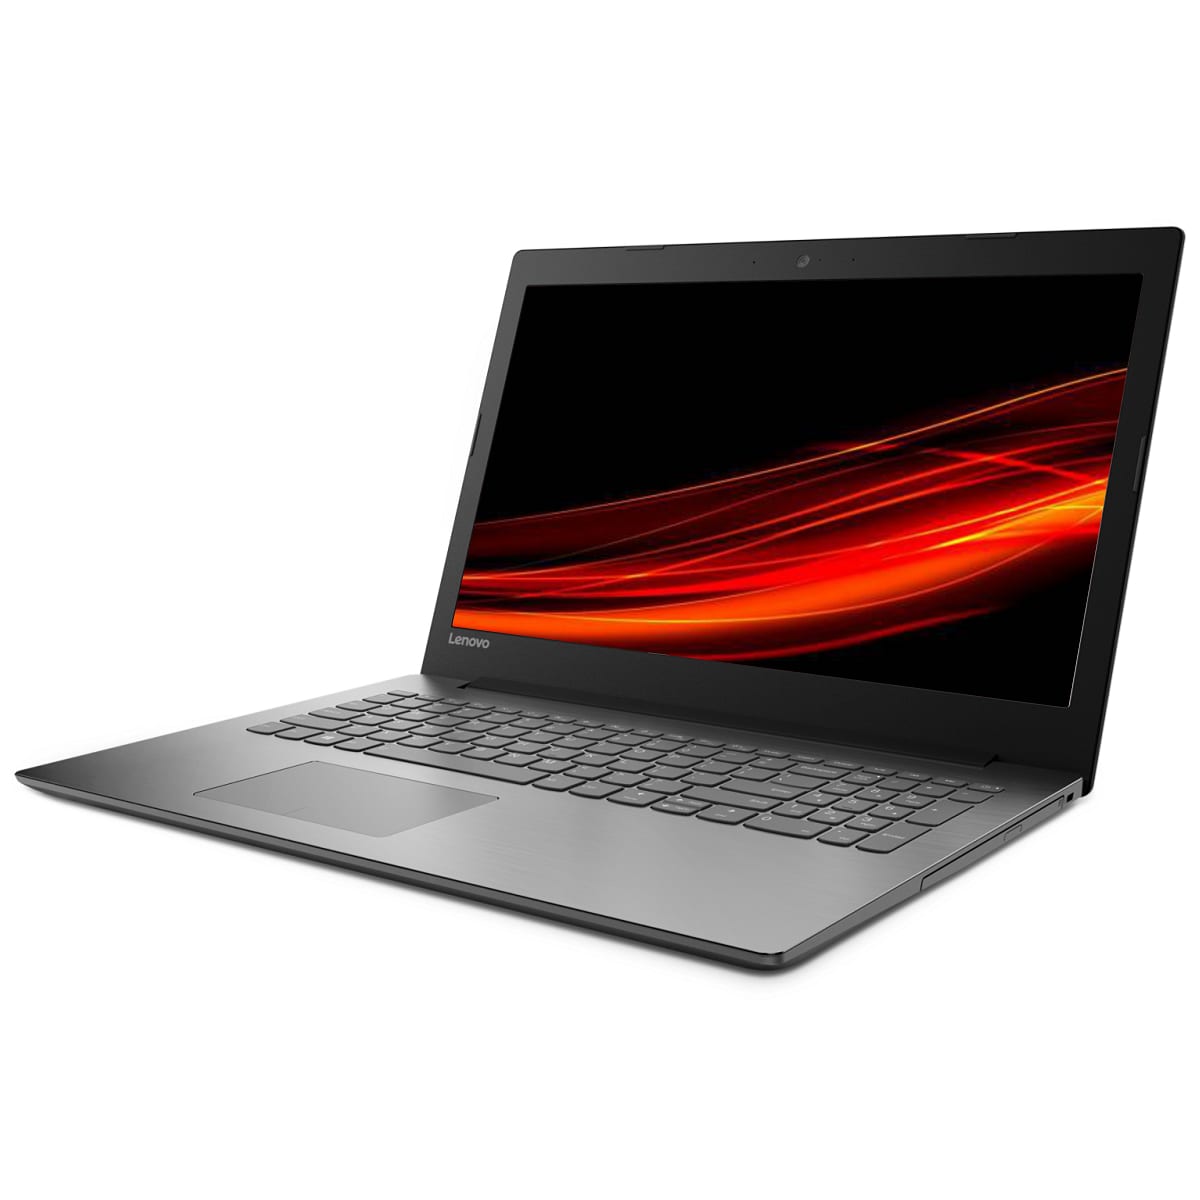 Купить Ноутбук Lenovo Ideapad 320